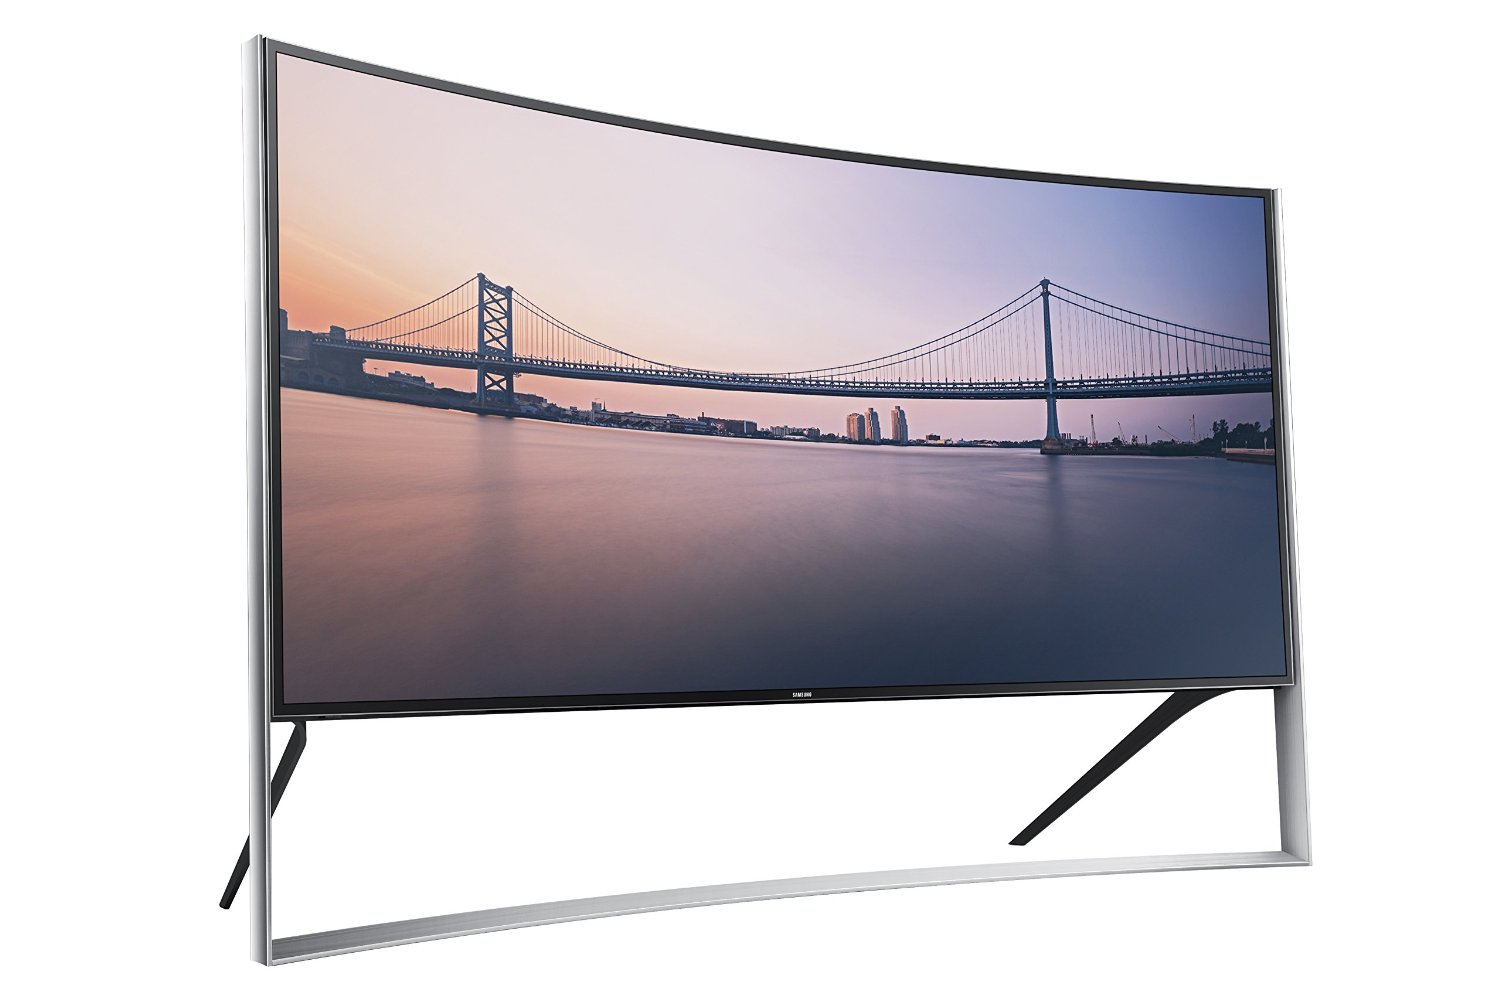 Samsung UN105S9 Curved 105-Inch 4K Ultra HD 120Hz 3D Smart LED TV 